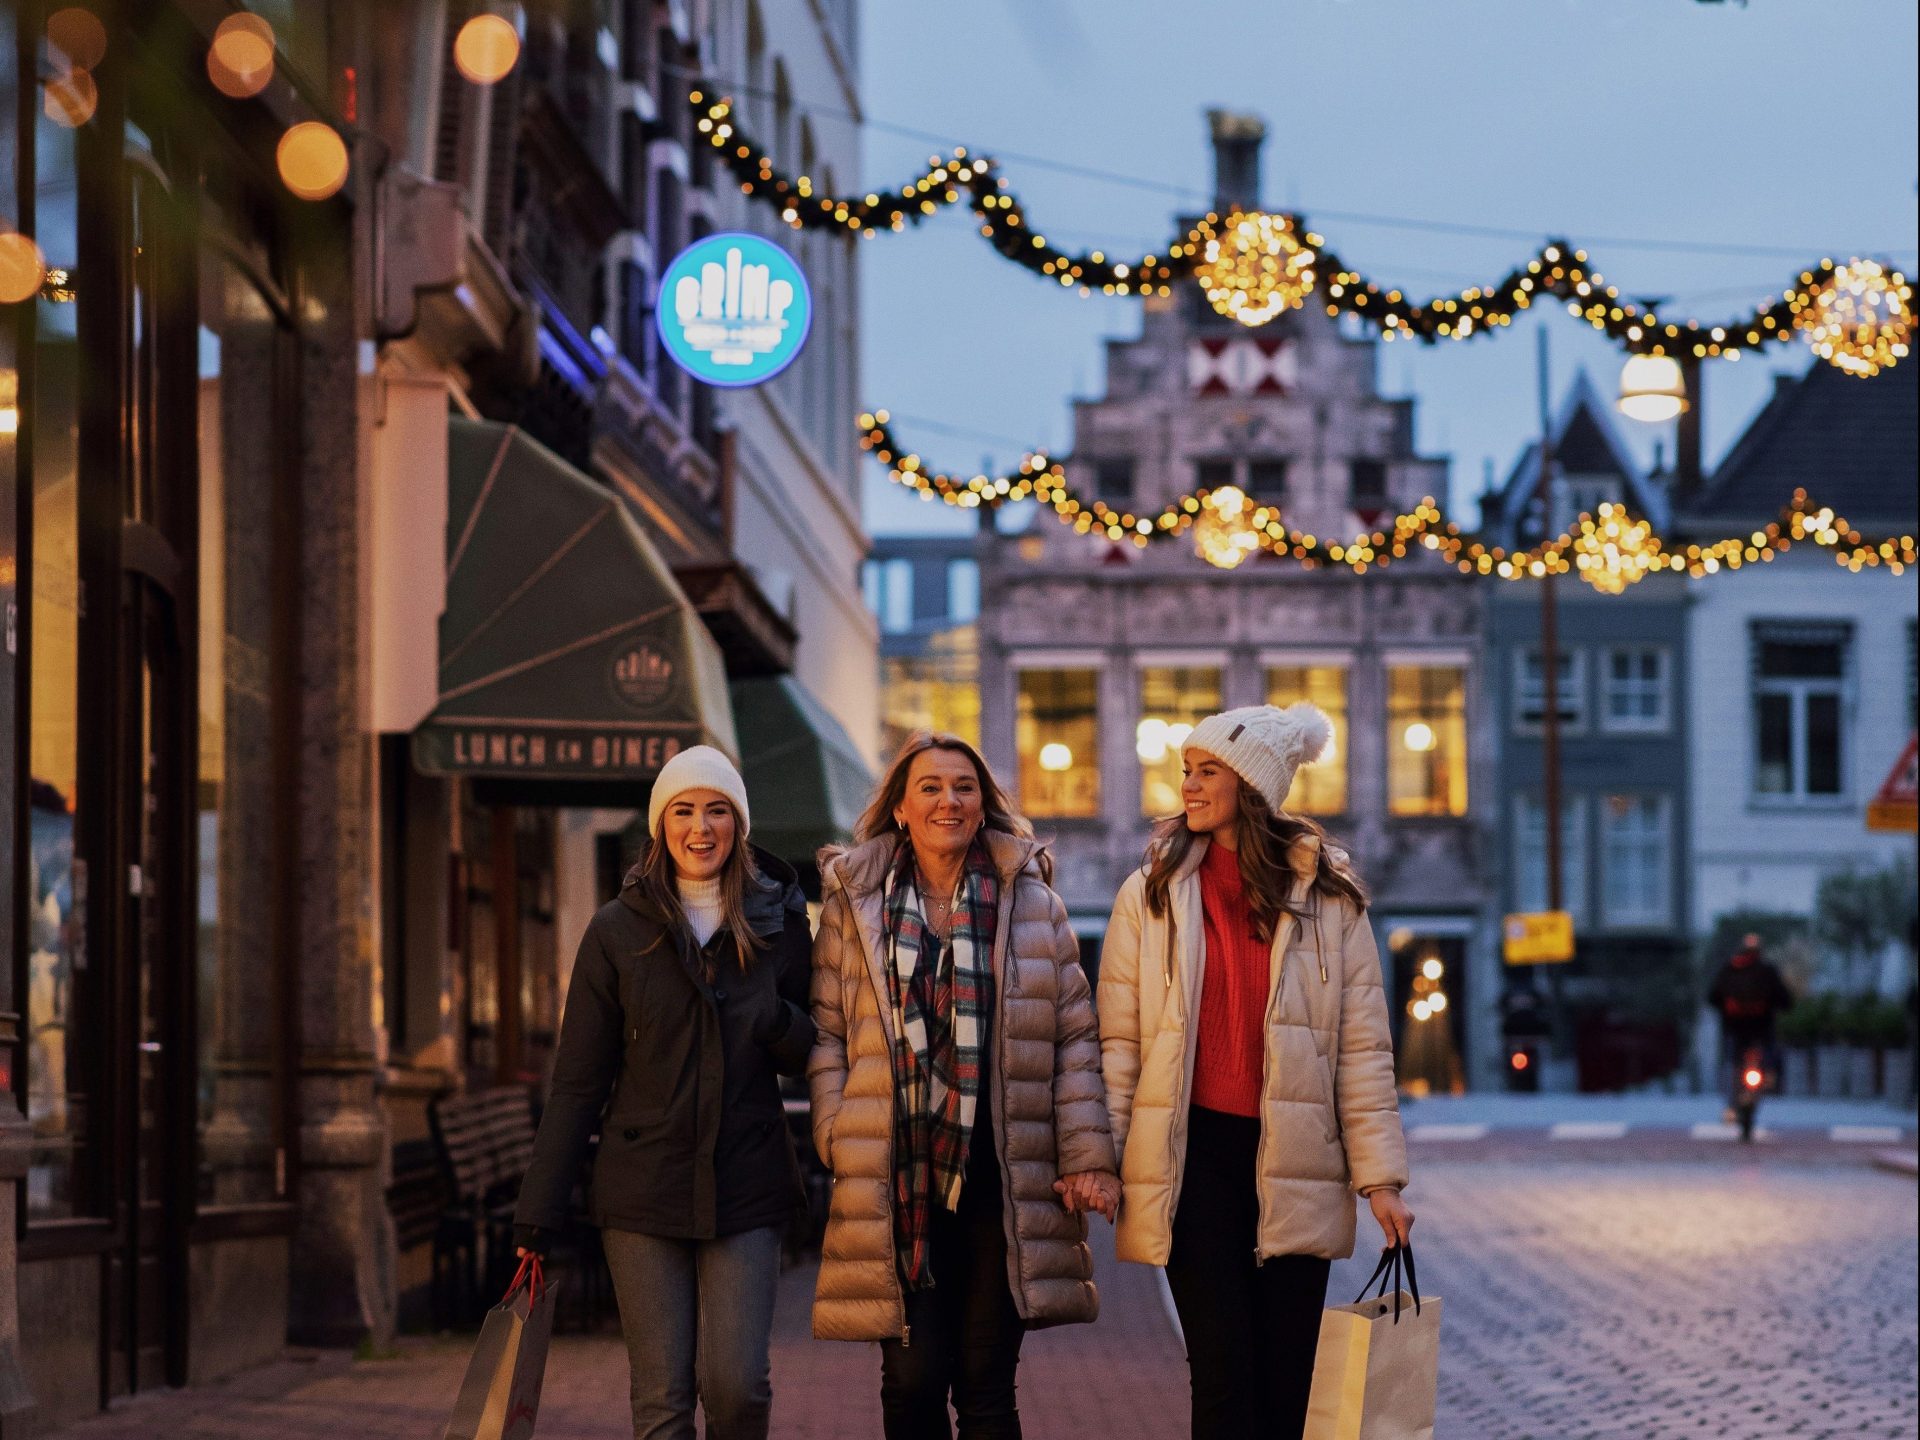 HEADER Winkelen dames december winter kerstverlichting Visstraat Gulden Os Dordrecht